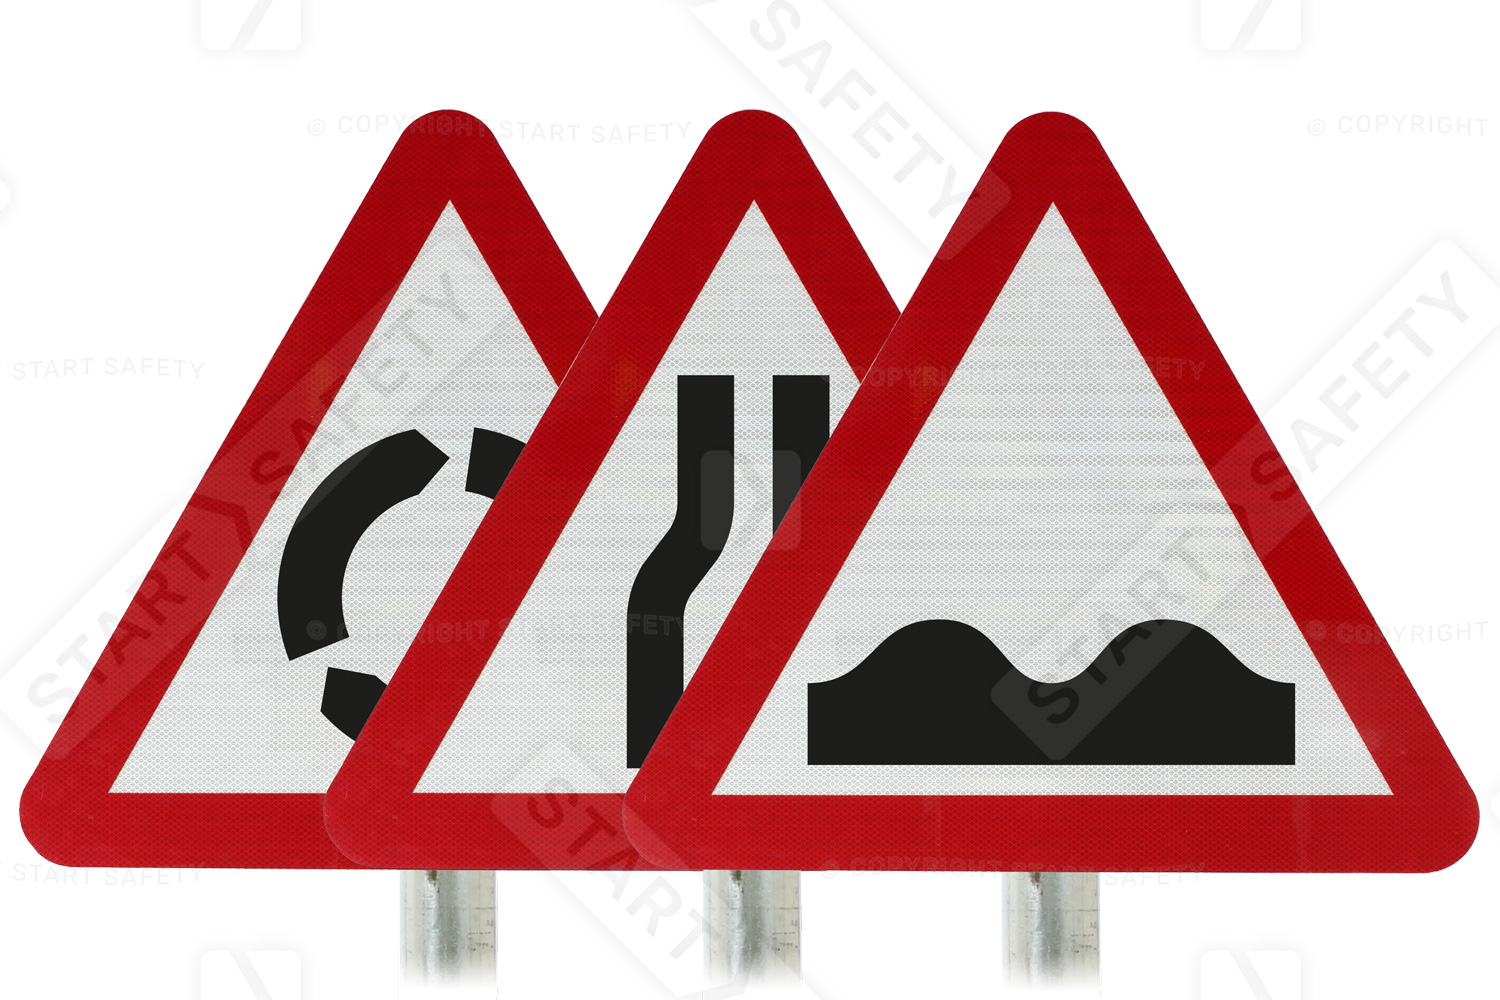 Selection of road warning signs